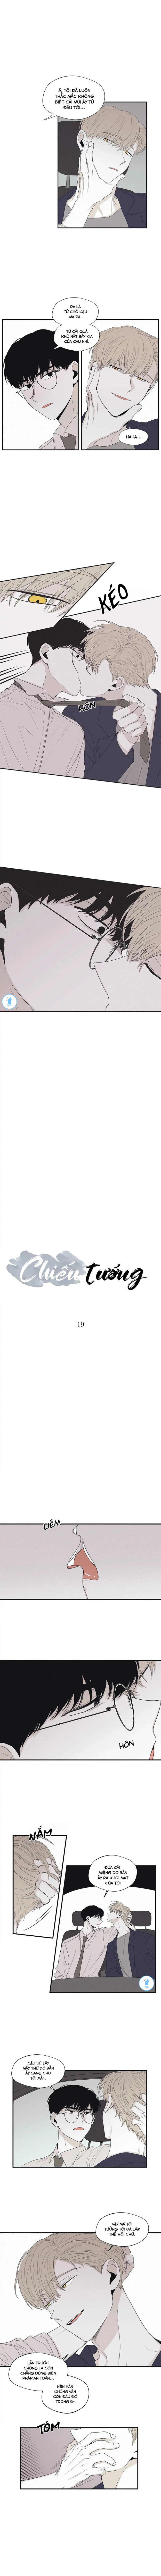 chieu-tuong-chap-19-1